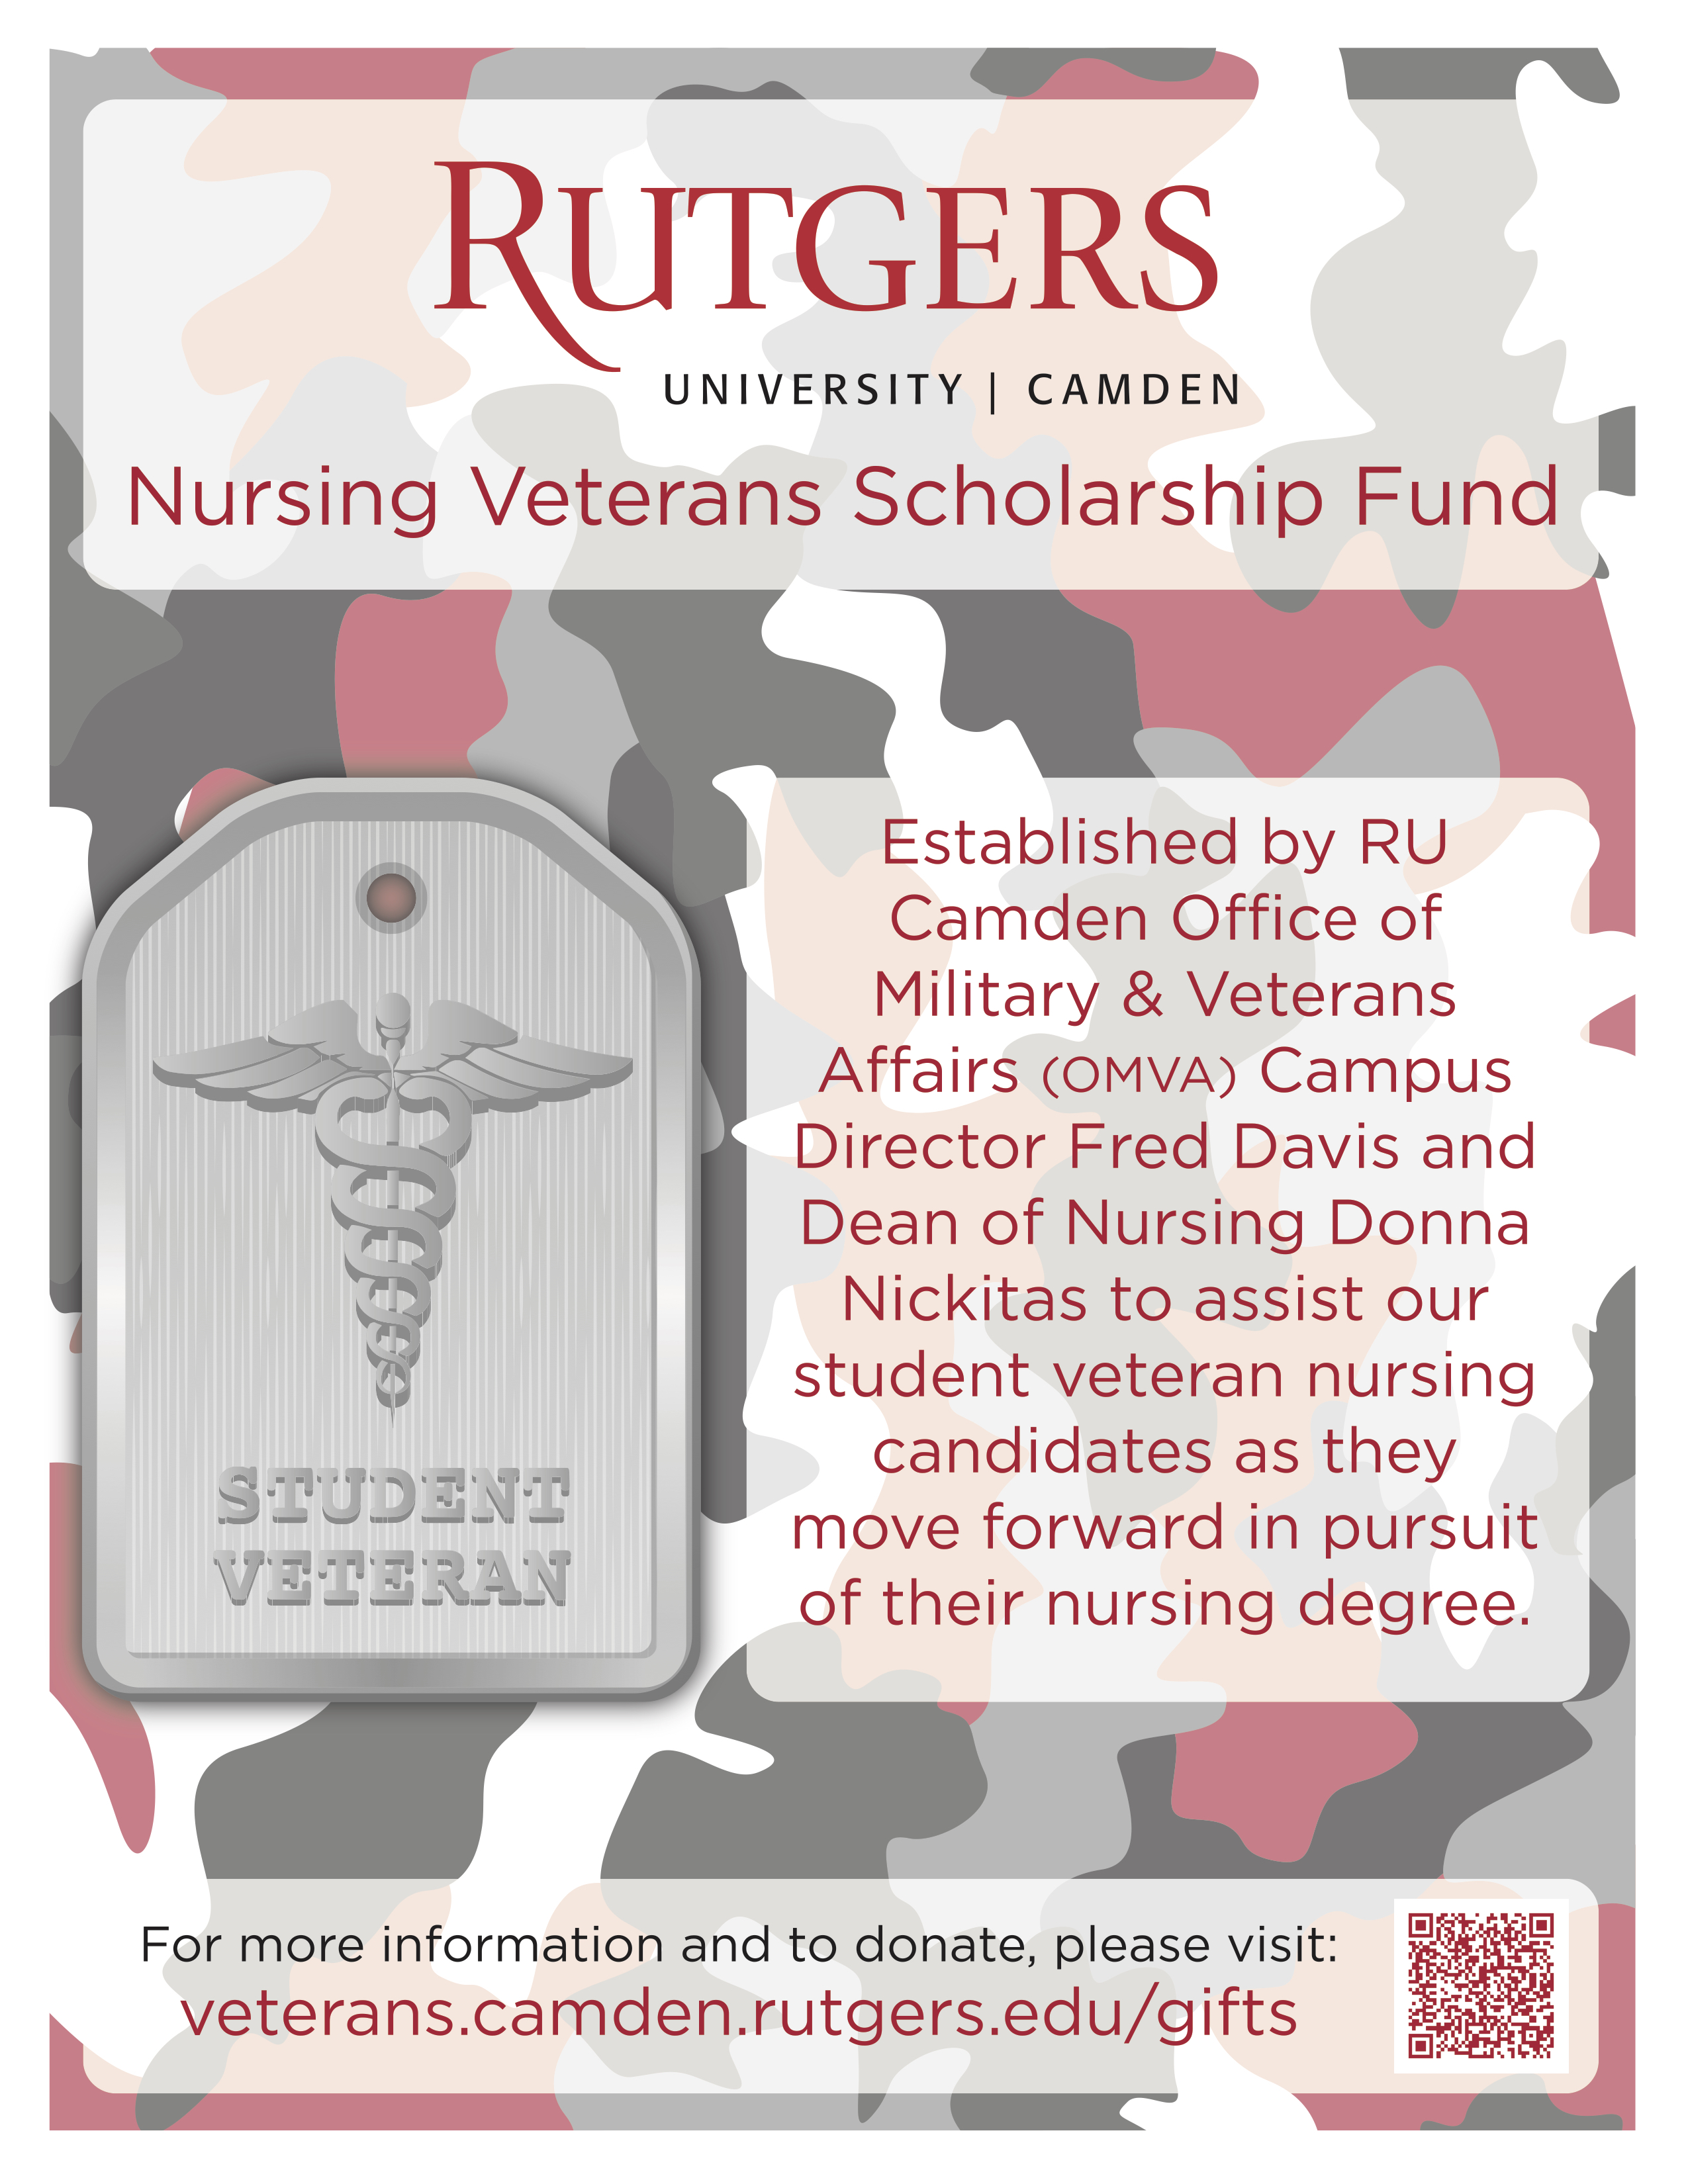 Nursing Veterans Scholarship Fund Image Link